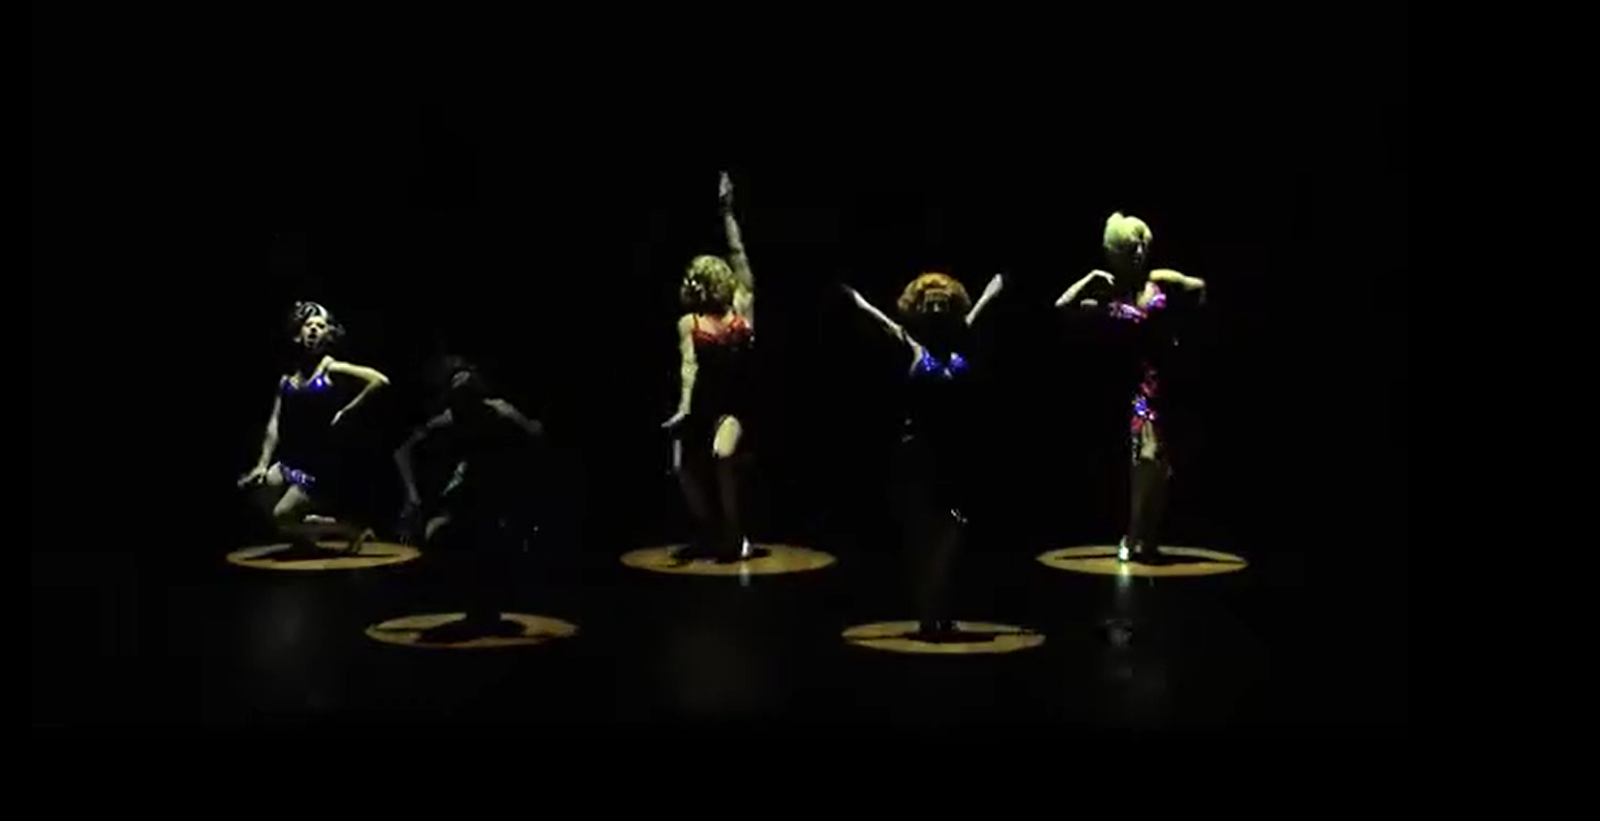 Five performers in sparkling costumes dancing under spotlights